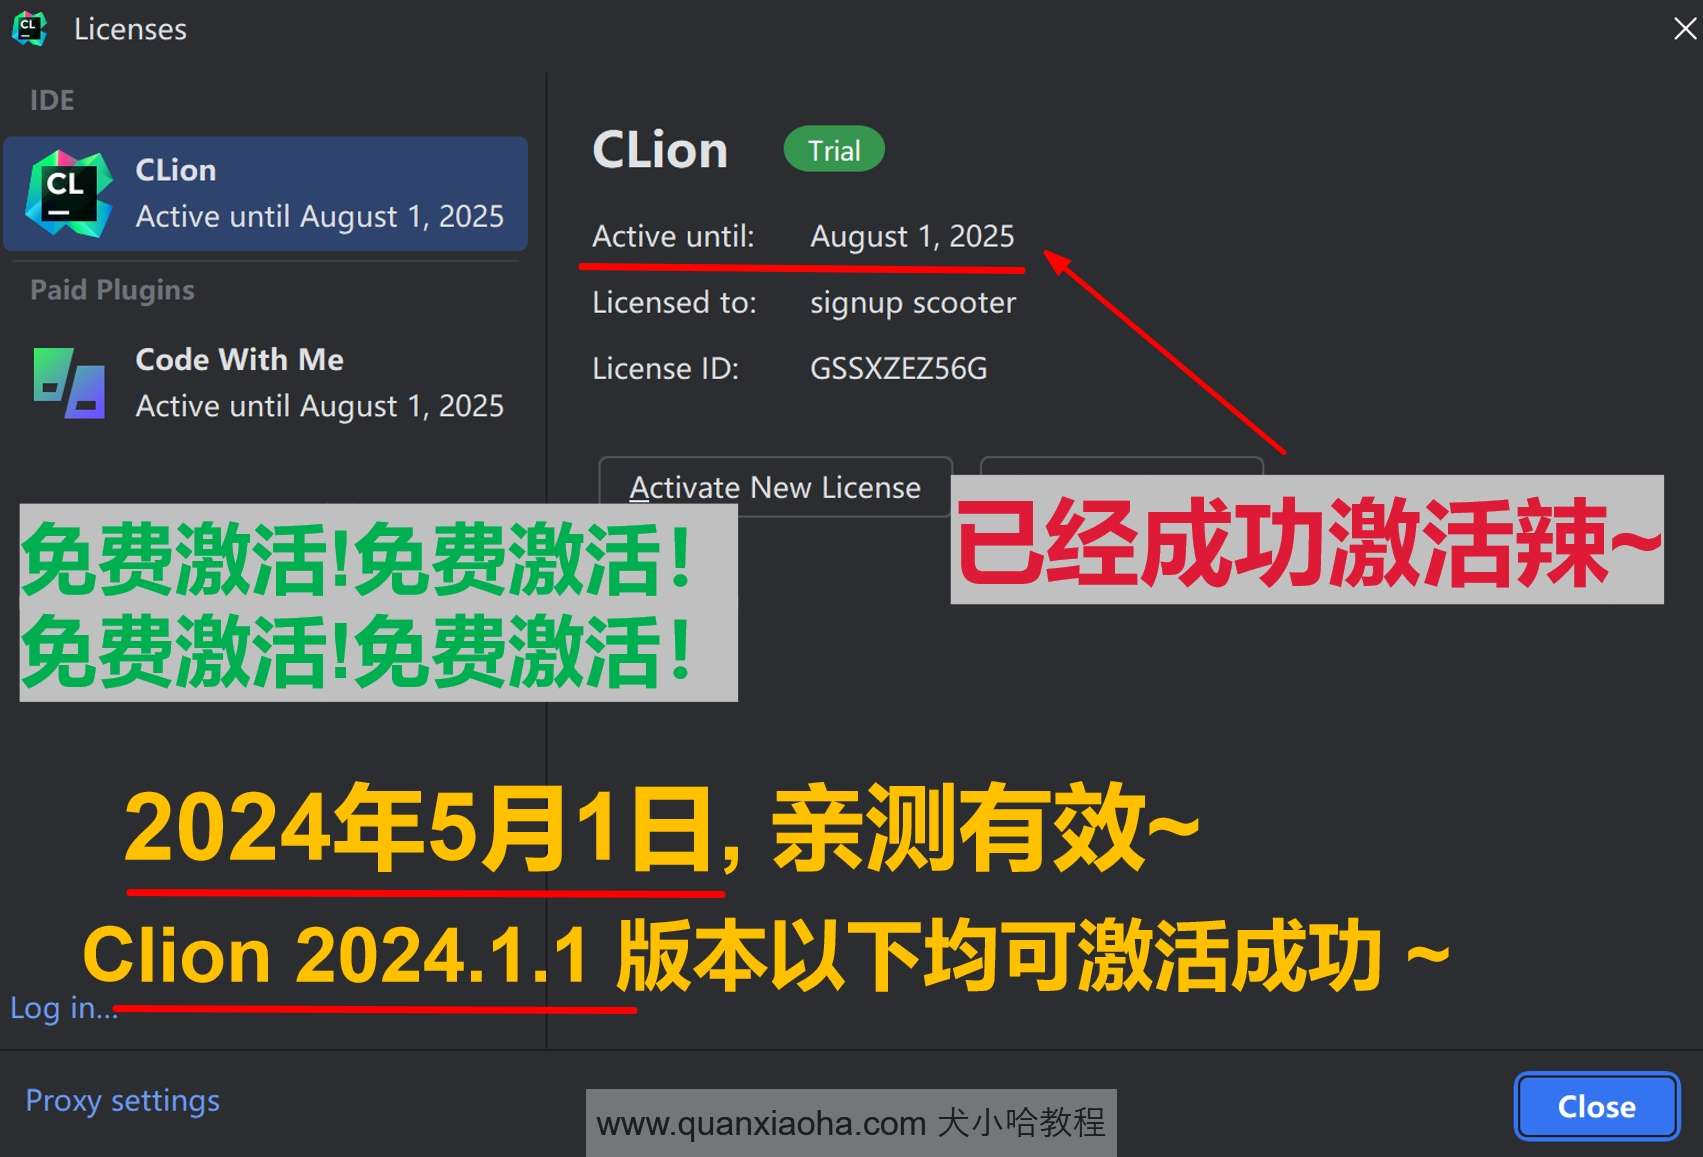 Clion 2024.1.1 版本启动界面